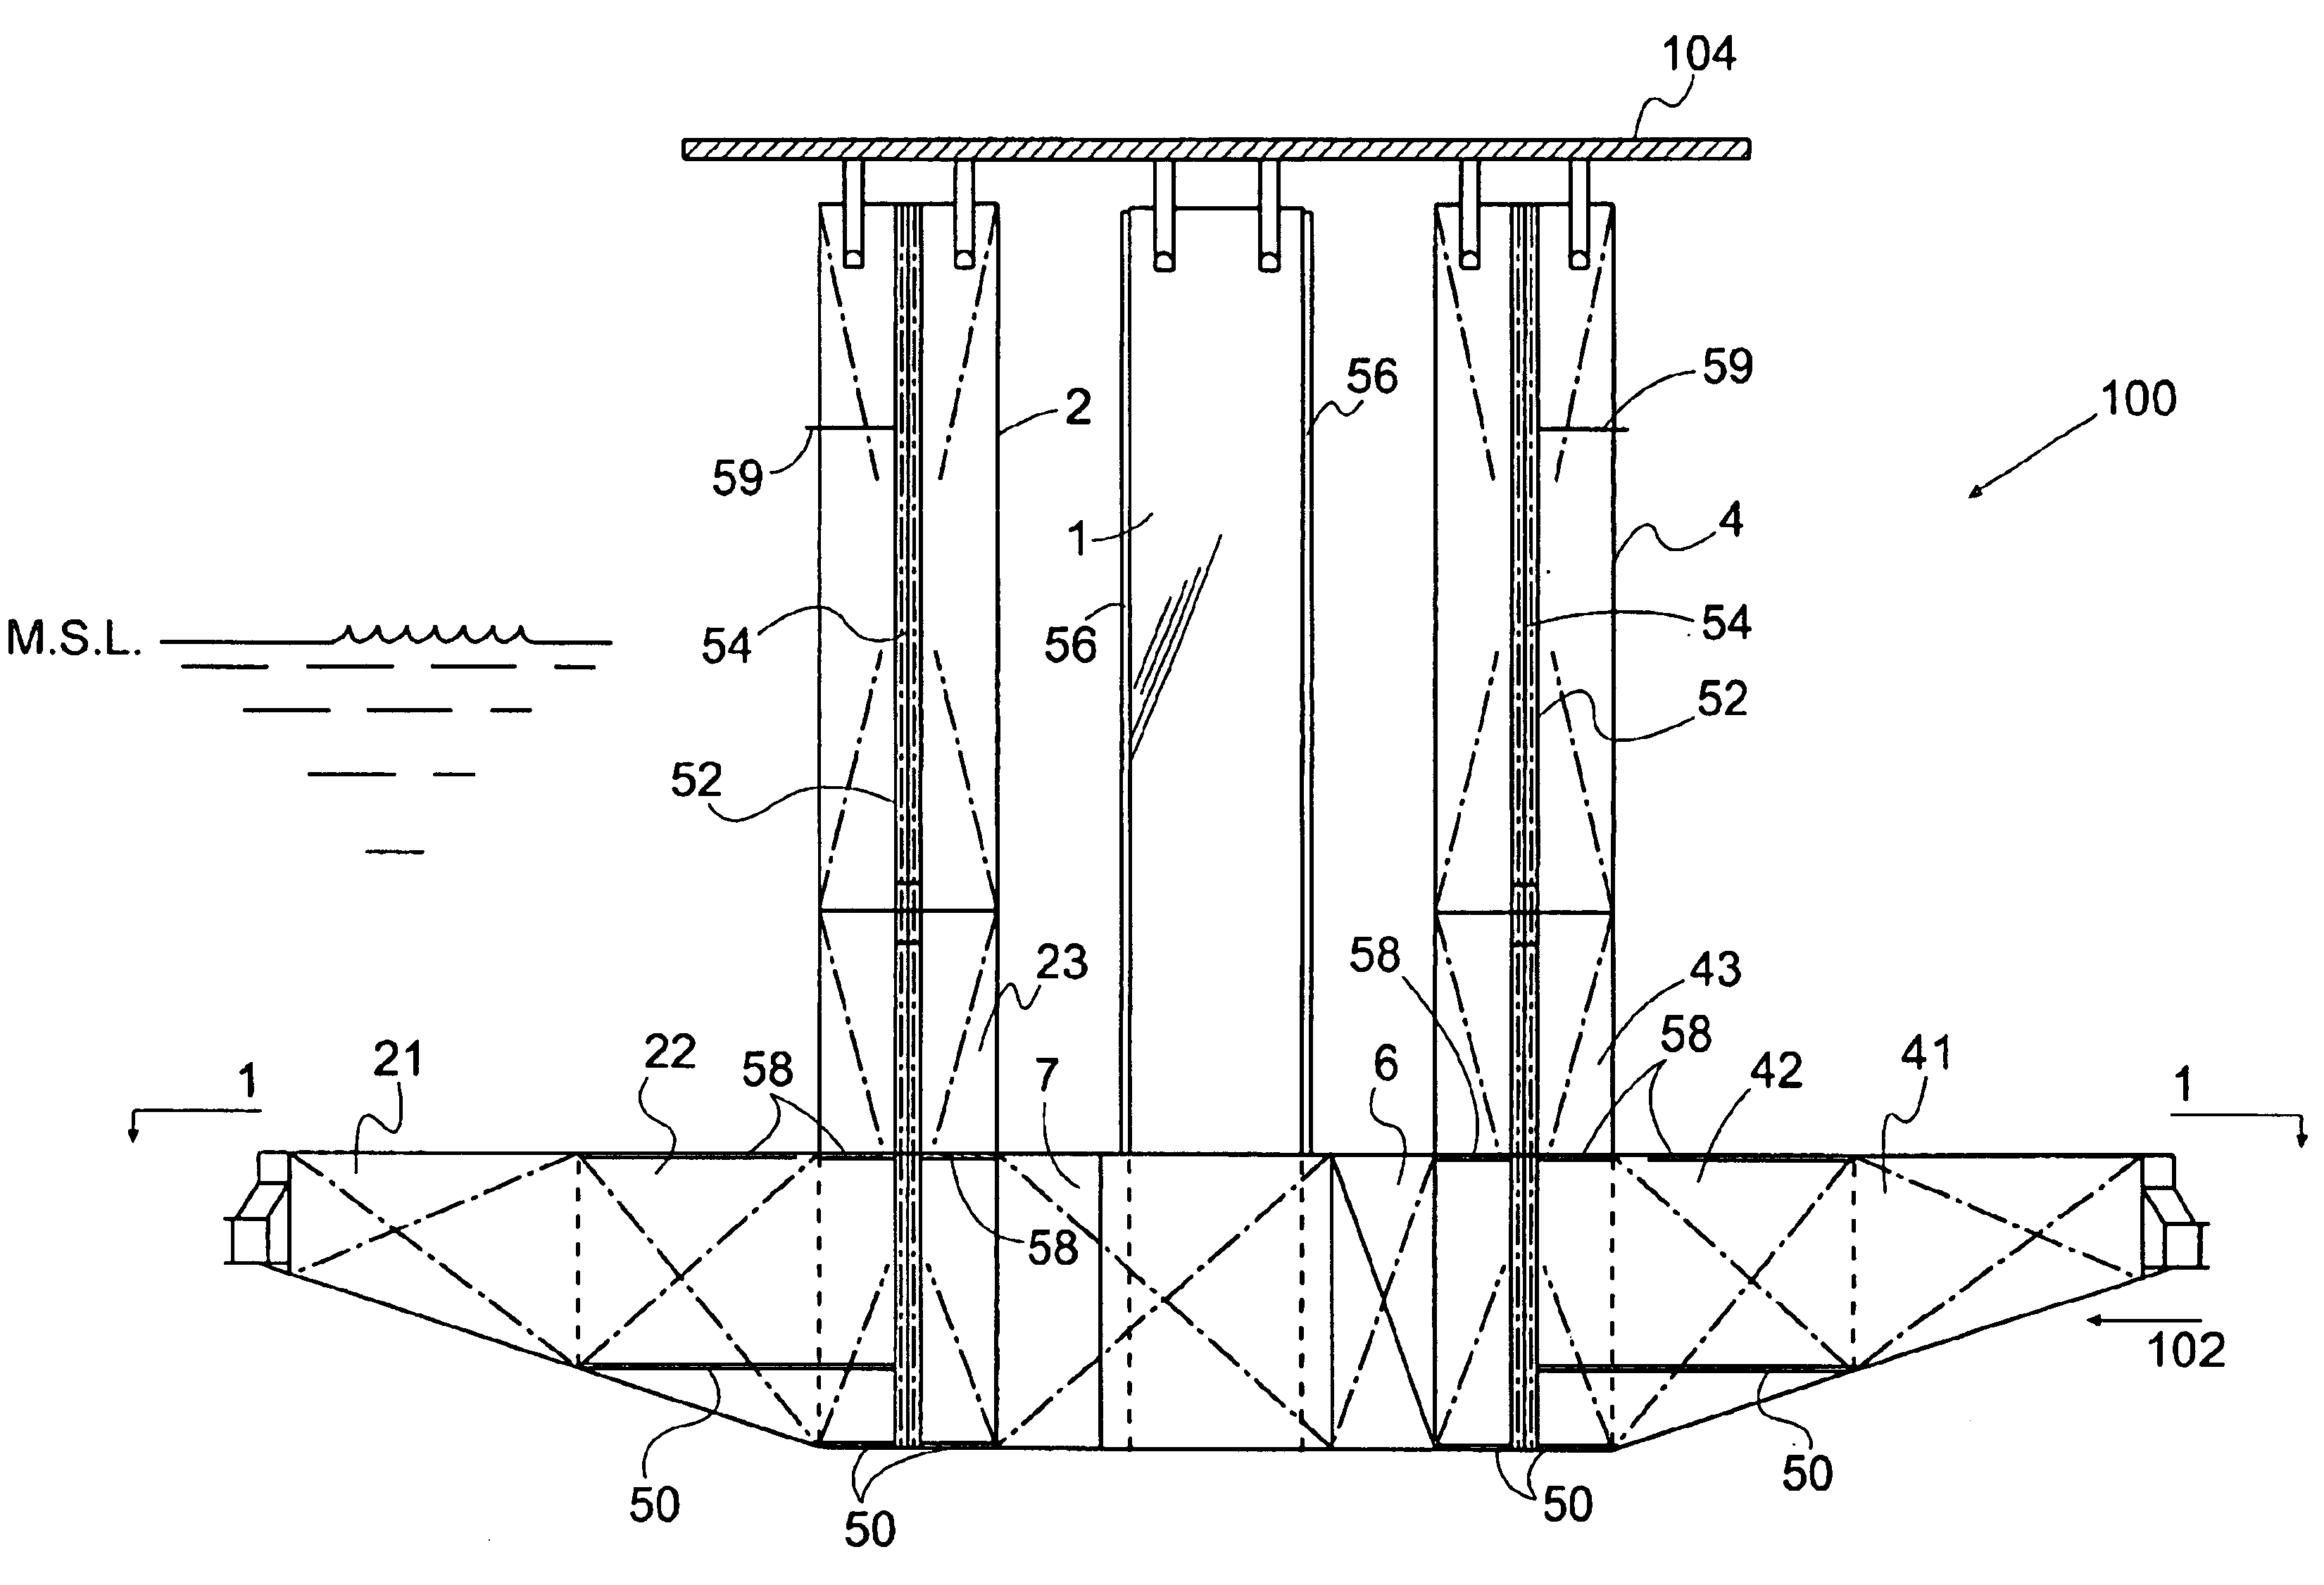 Ballast system for tension leg platform